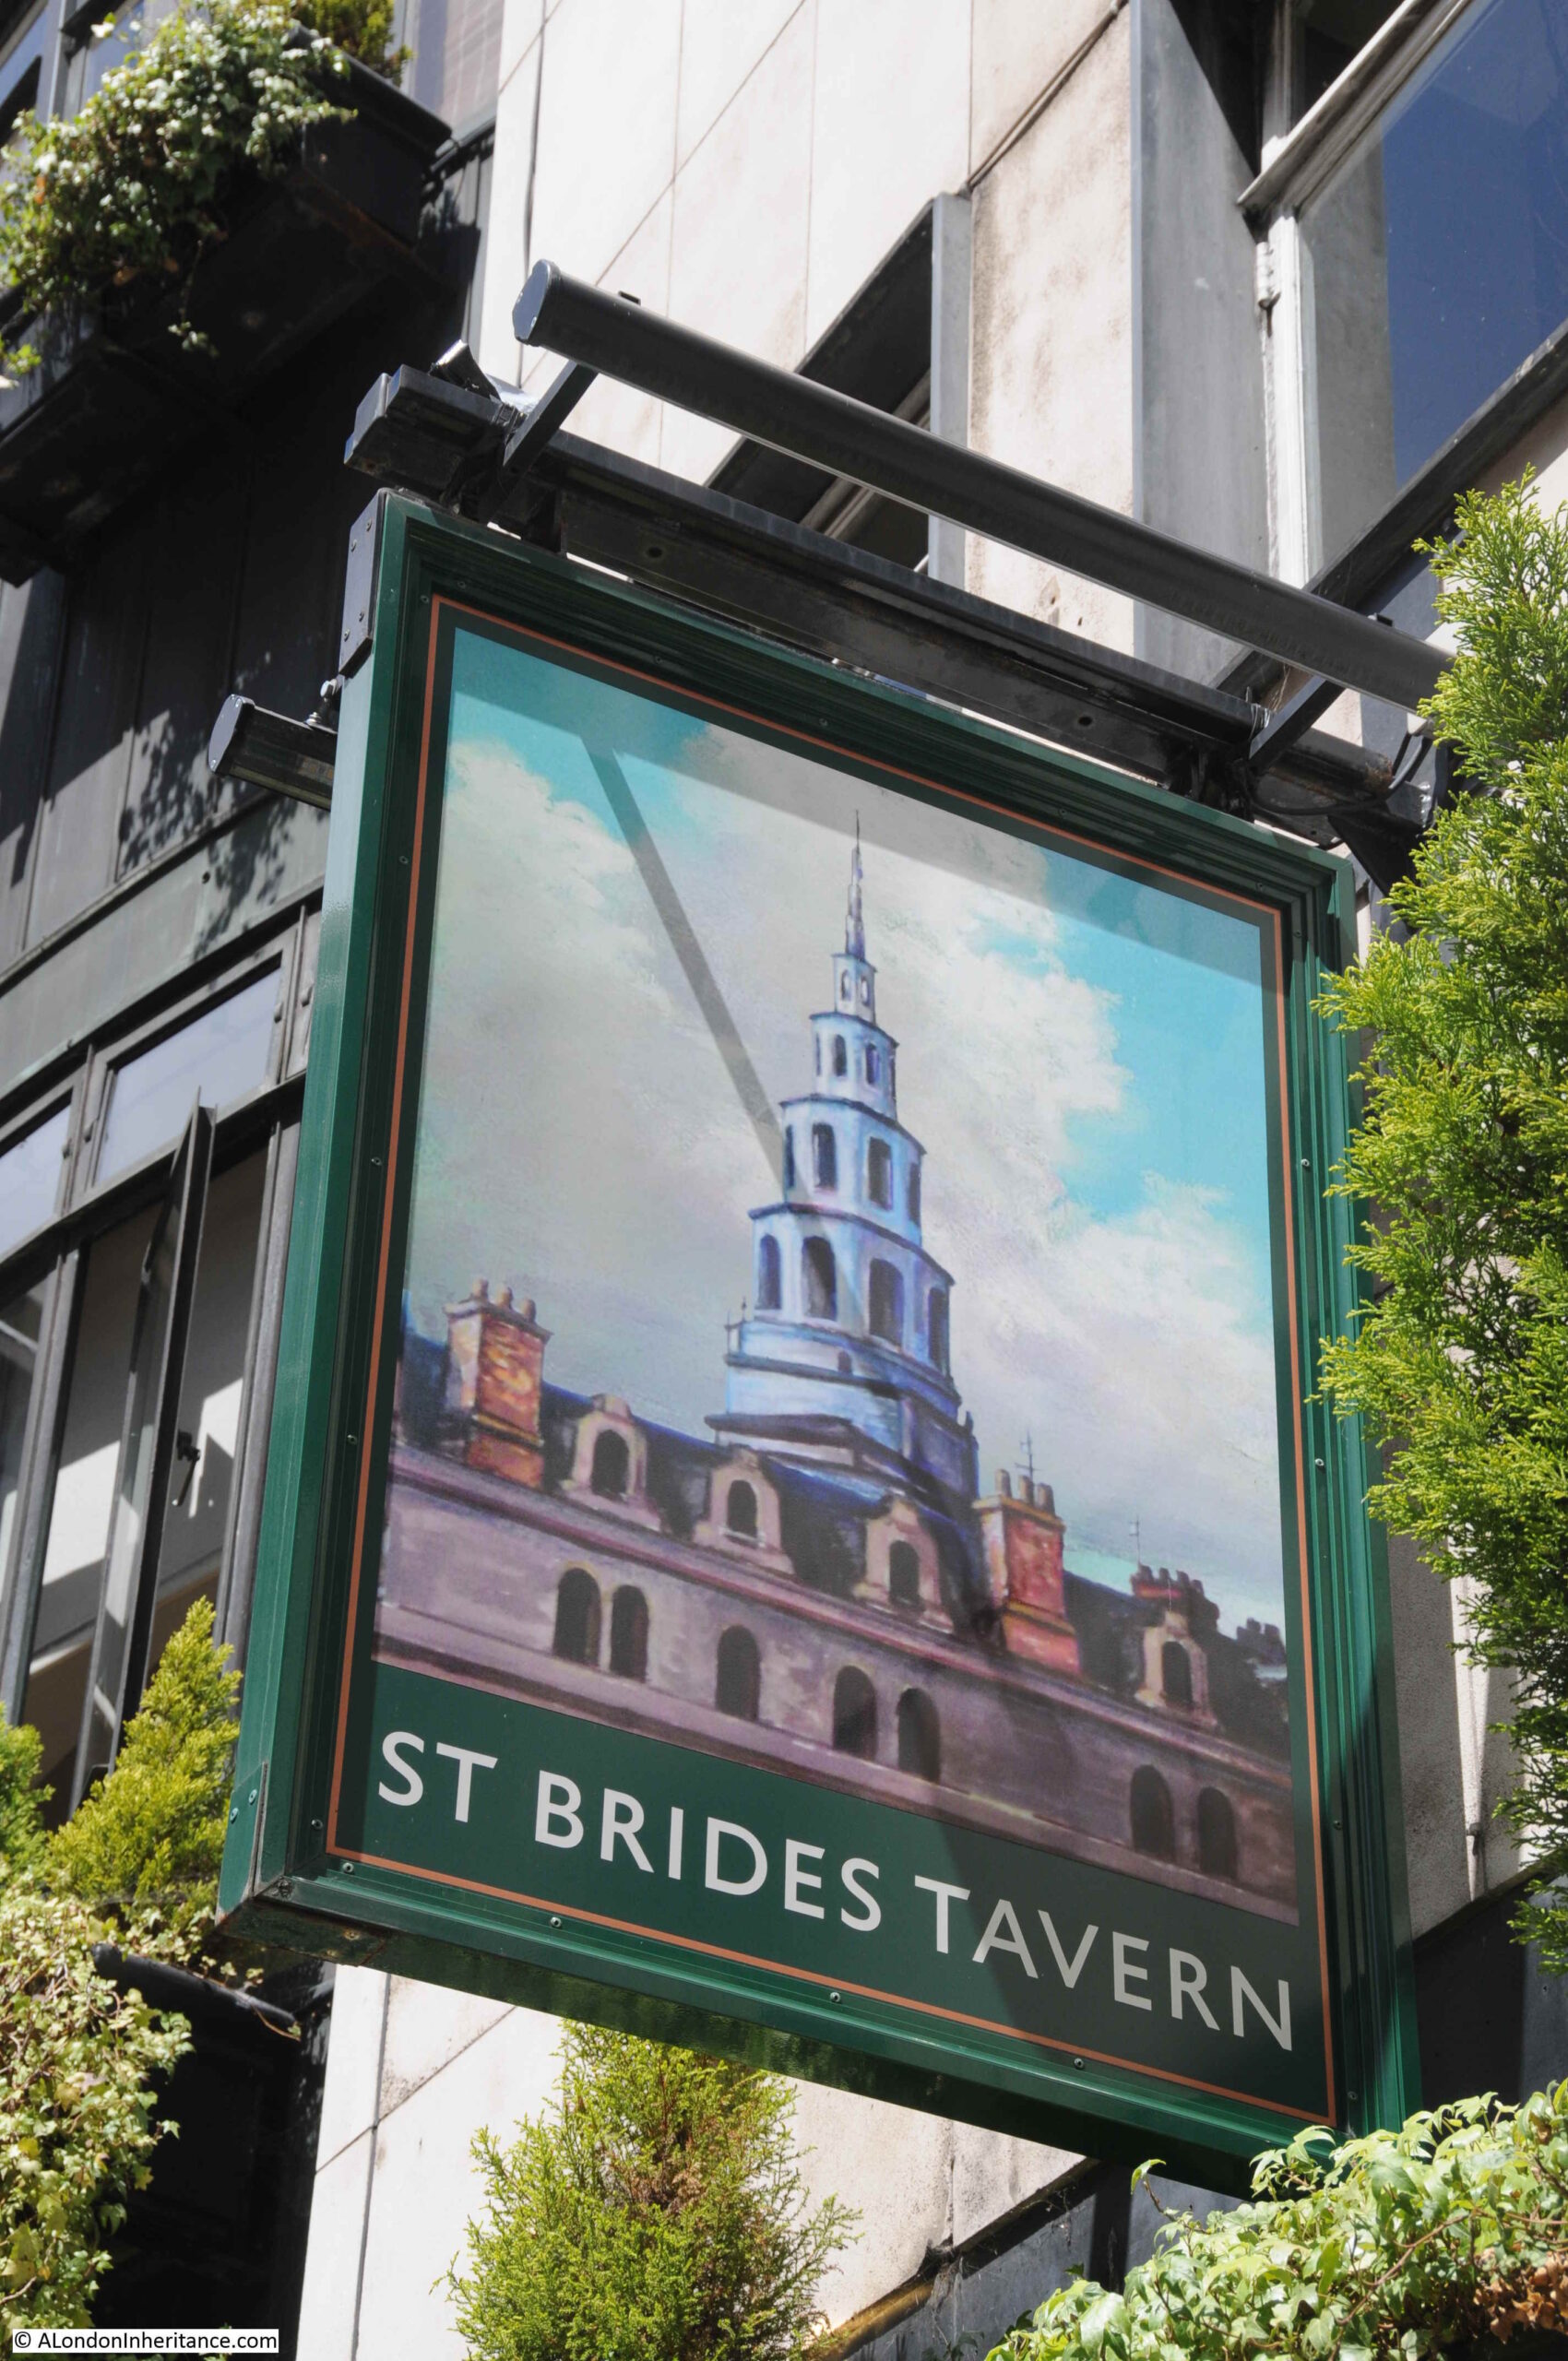 St. Bride's Tavern